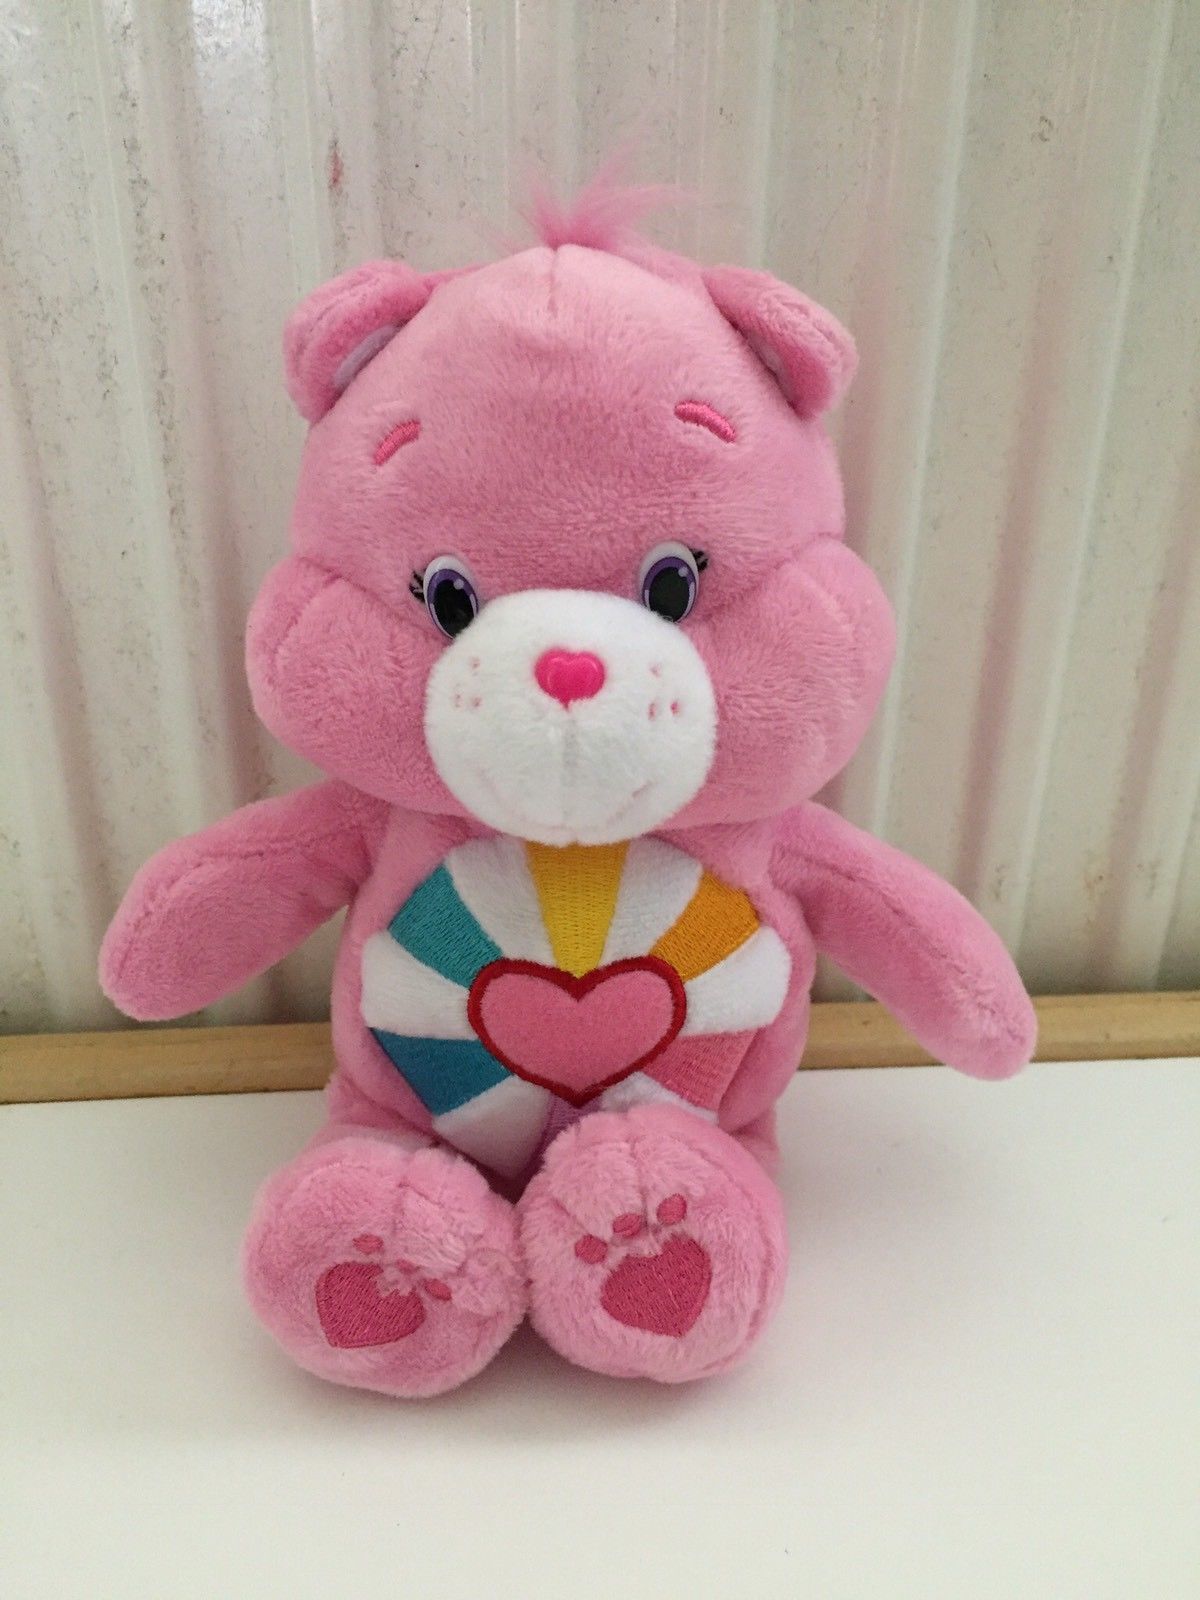 Care Bear - Hopeful Heart Pink Soft Plush Toy Teddy